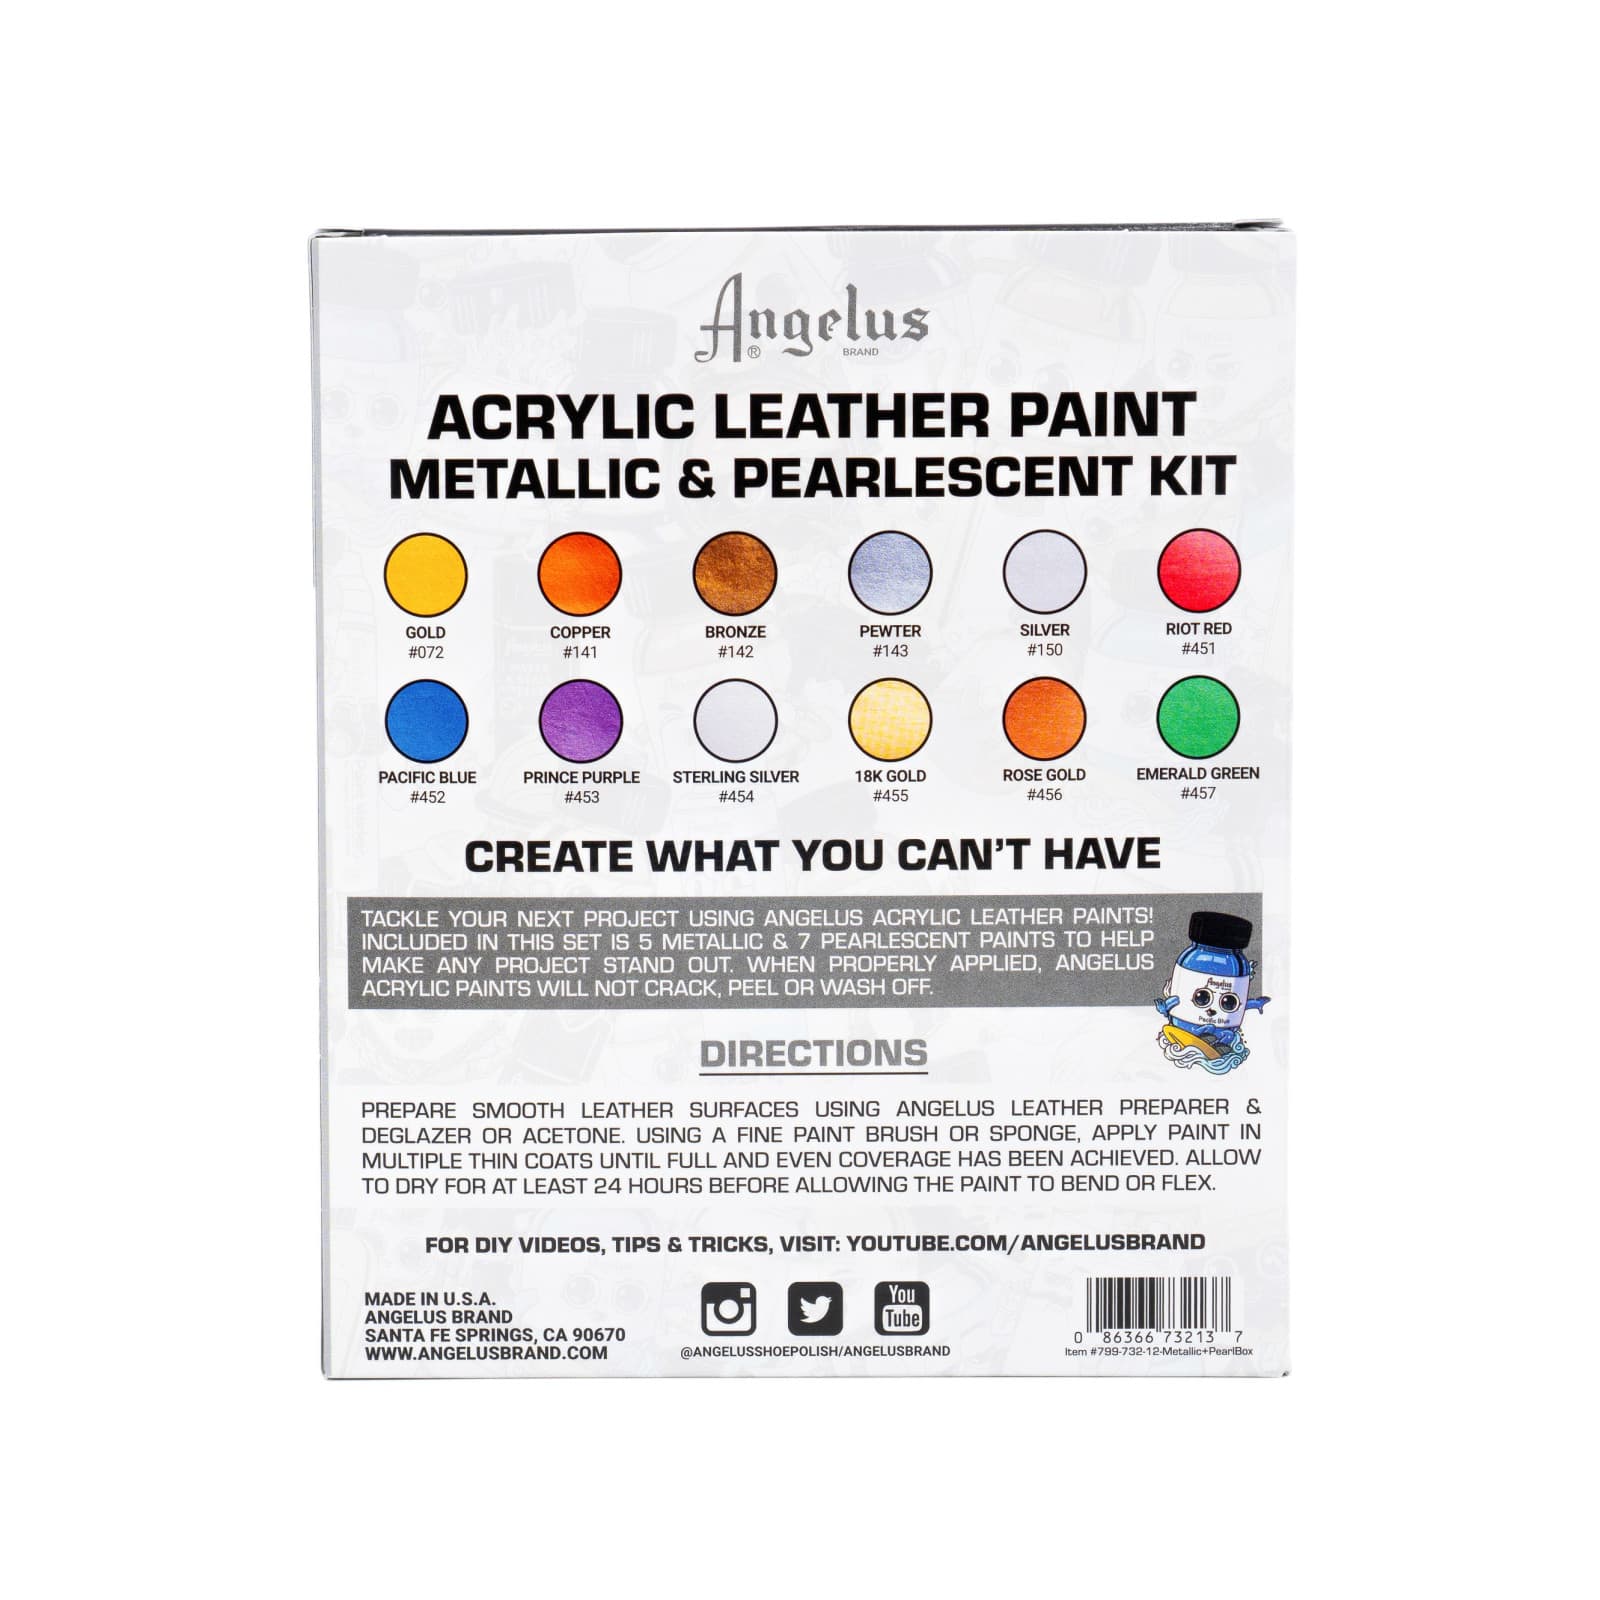 12 Packs: 12 ct. (144 total) Angelus&#xAE; Metallic &#x26; Pearlescent Acrylic Leather Paint Kit